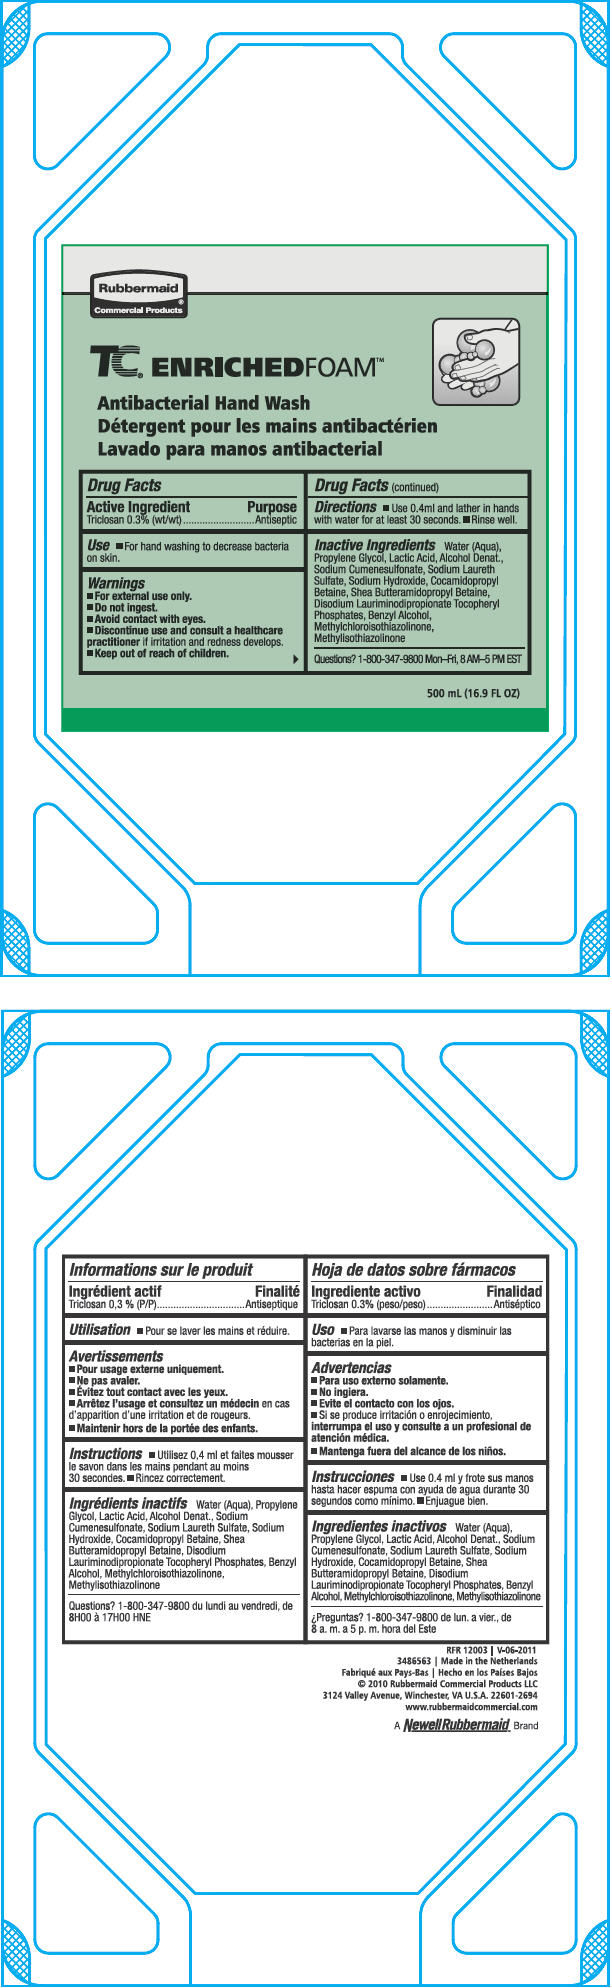 PRINCIPAL DISPLAY PANEL - 500 mL Bag Label